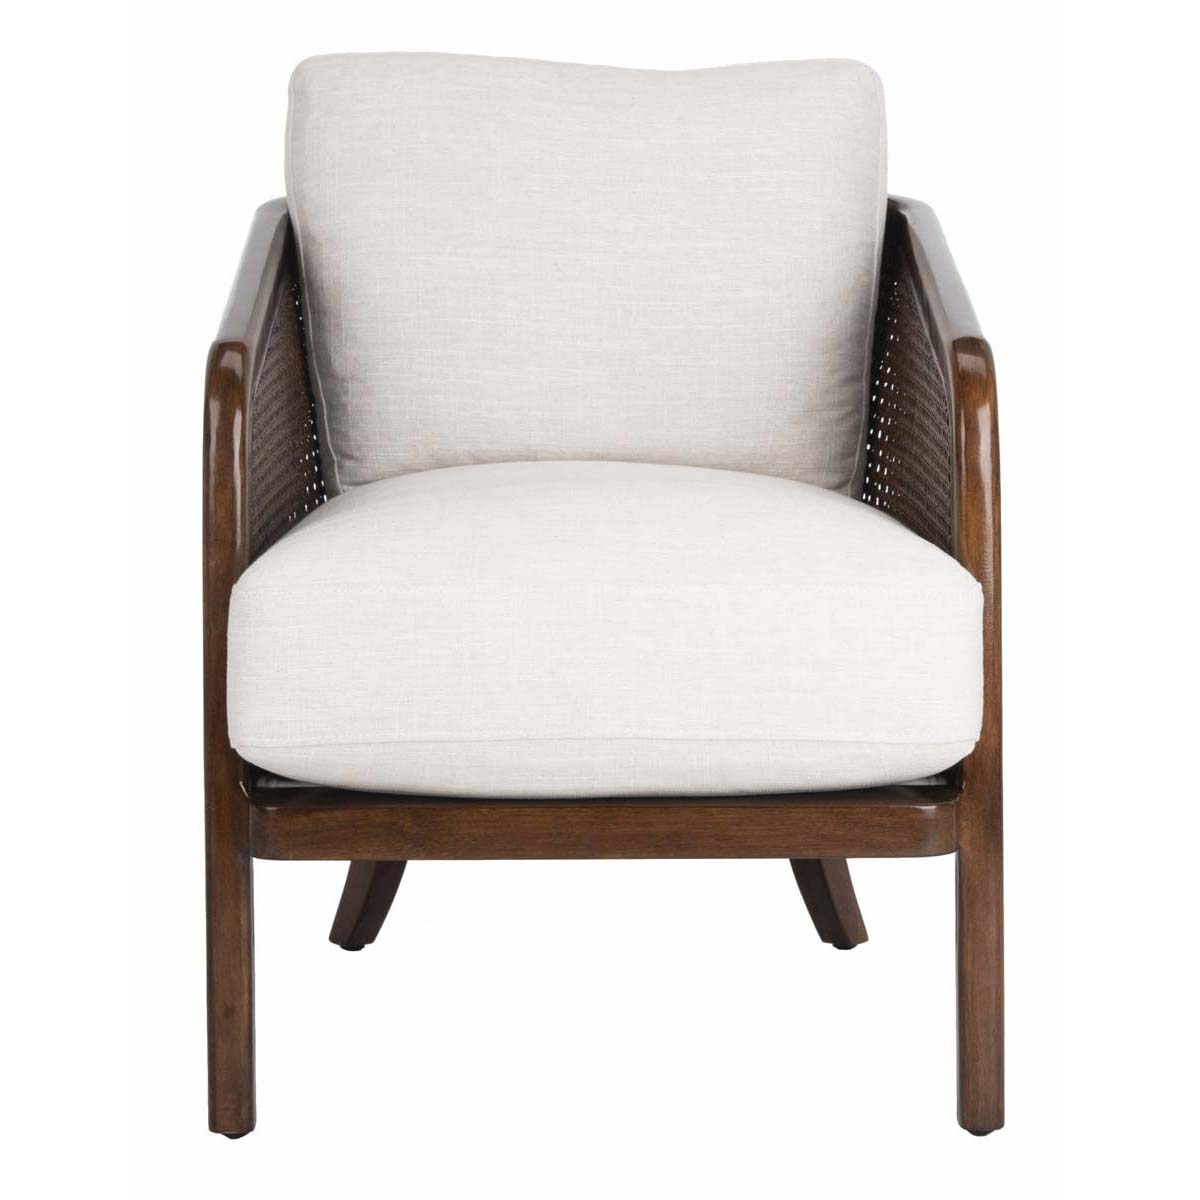 Safavieh Couture Caruso Barrel Back Chair - Oatmeal